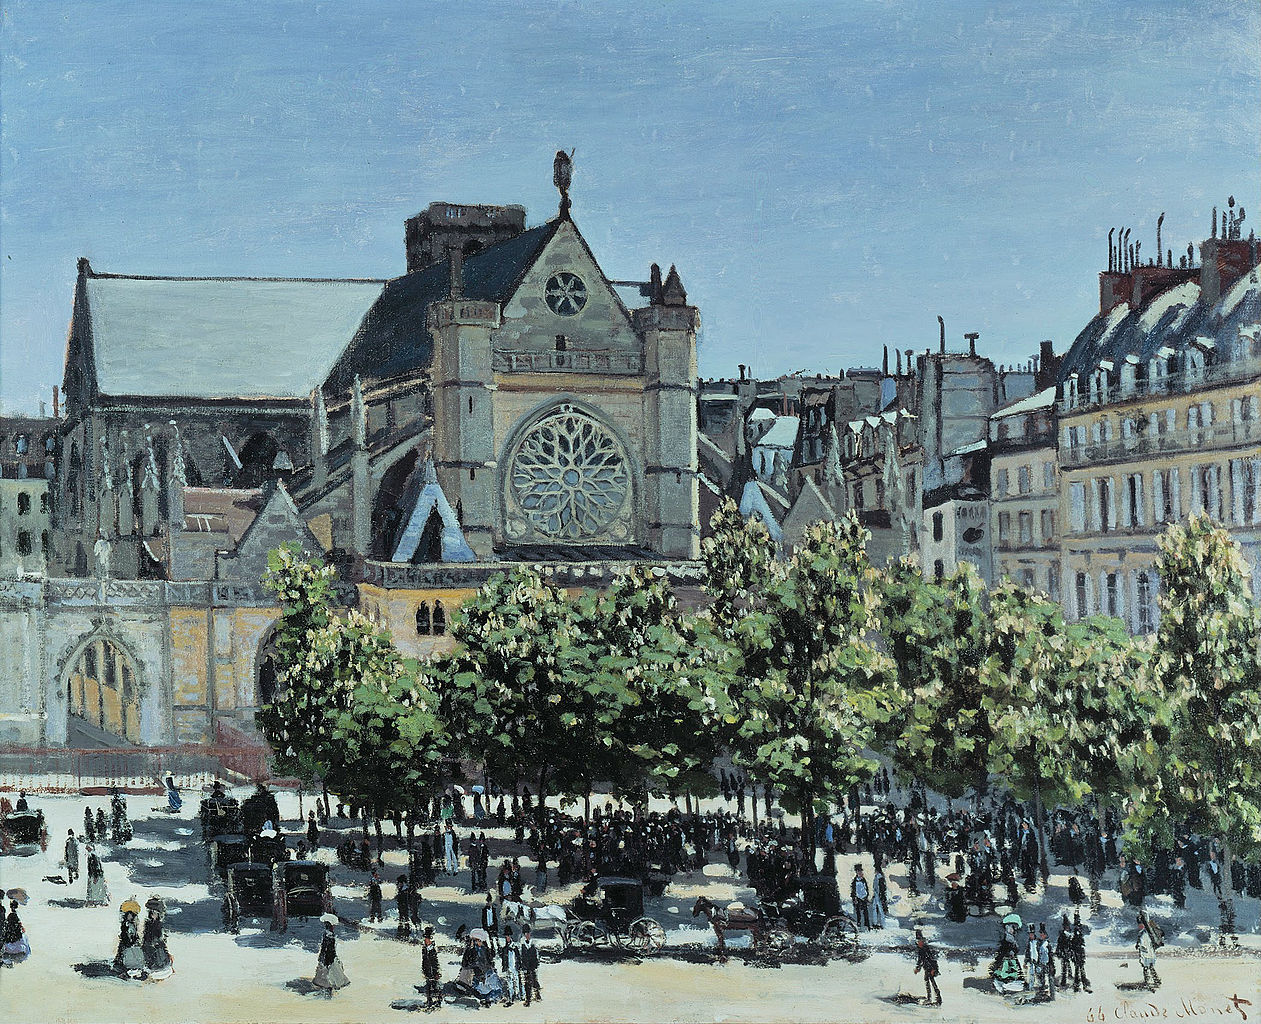 Claude+Monet-1840-1926 (708).jpg